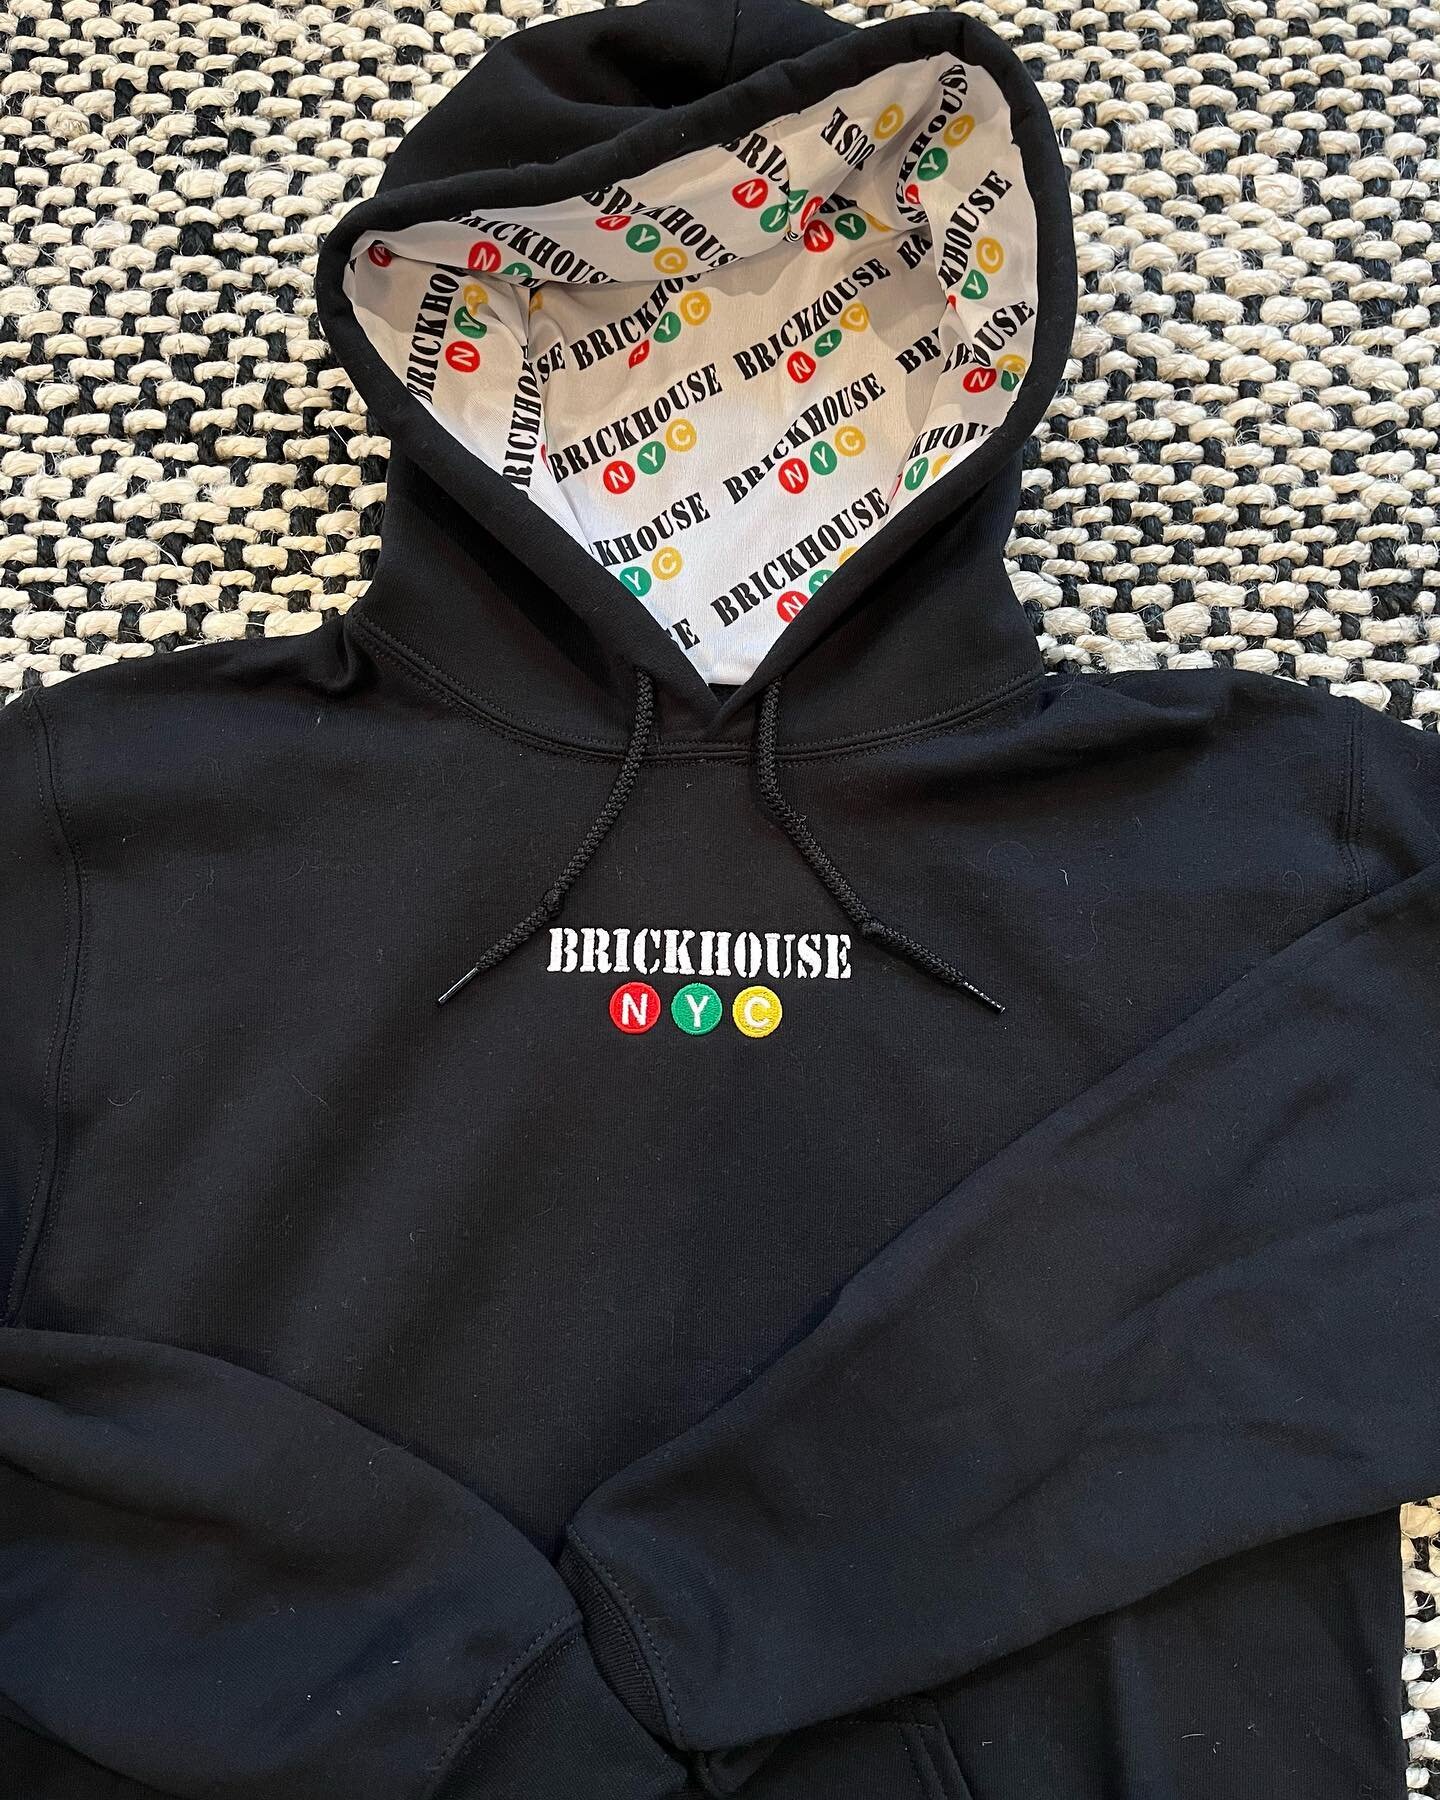 Our newest obsession:  custom printed hoodie liners
❤️&zwj;🔥❤️&zwj;🔥❤️&zwj;🔥❤️&zwj;🔥❤️&zwj;🔥❤️&zwj;🔥
@brickhouse
#swag #swagbag #hoodie #sublimated #printing #fullcolor #branding #onbrand #trend #trending #swag #everybody #wants #corbinstyle